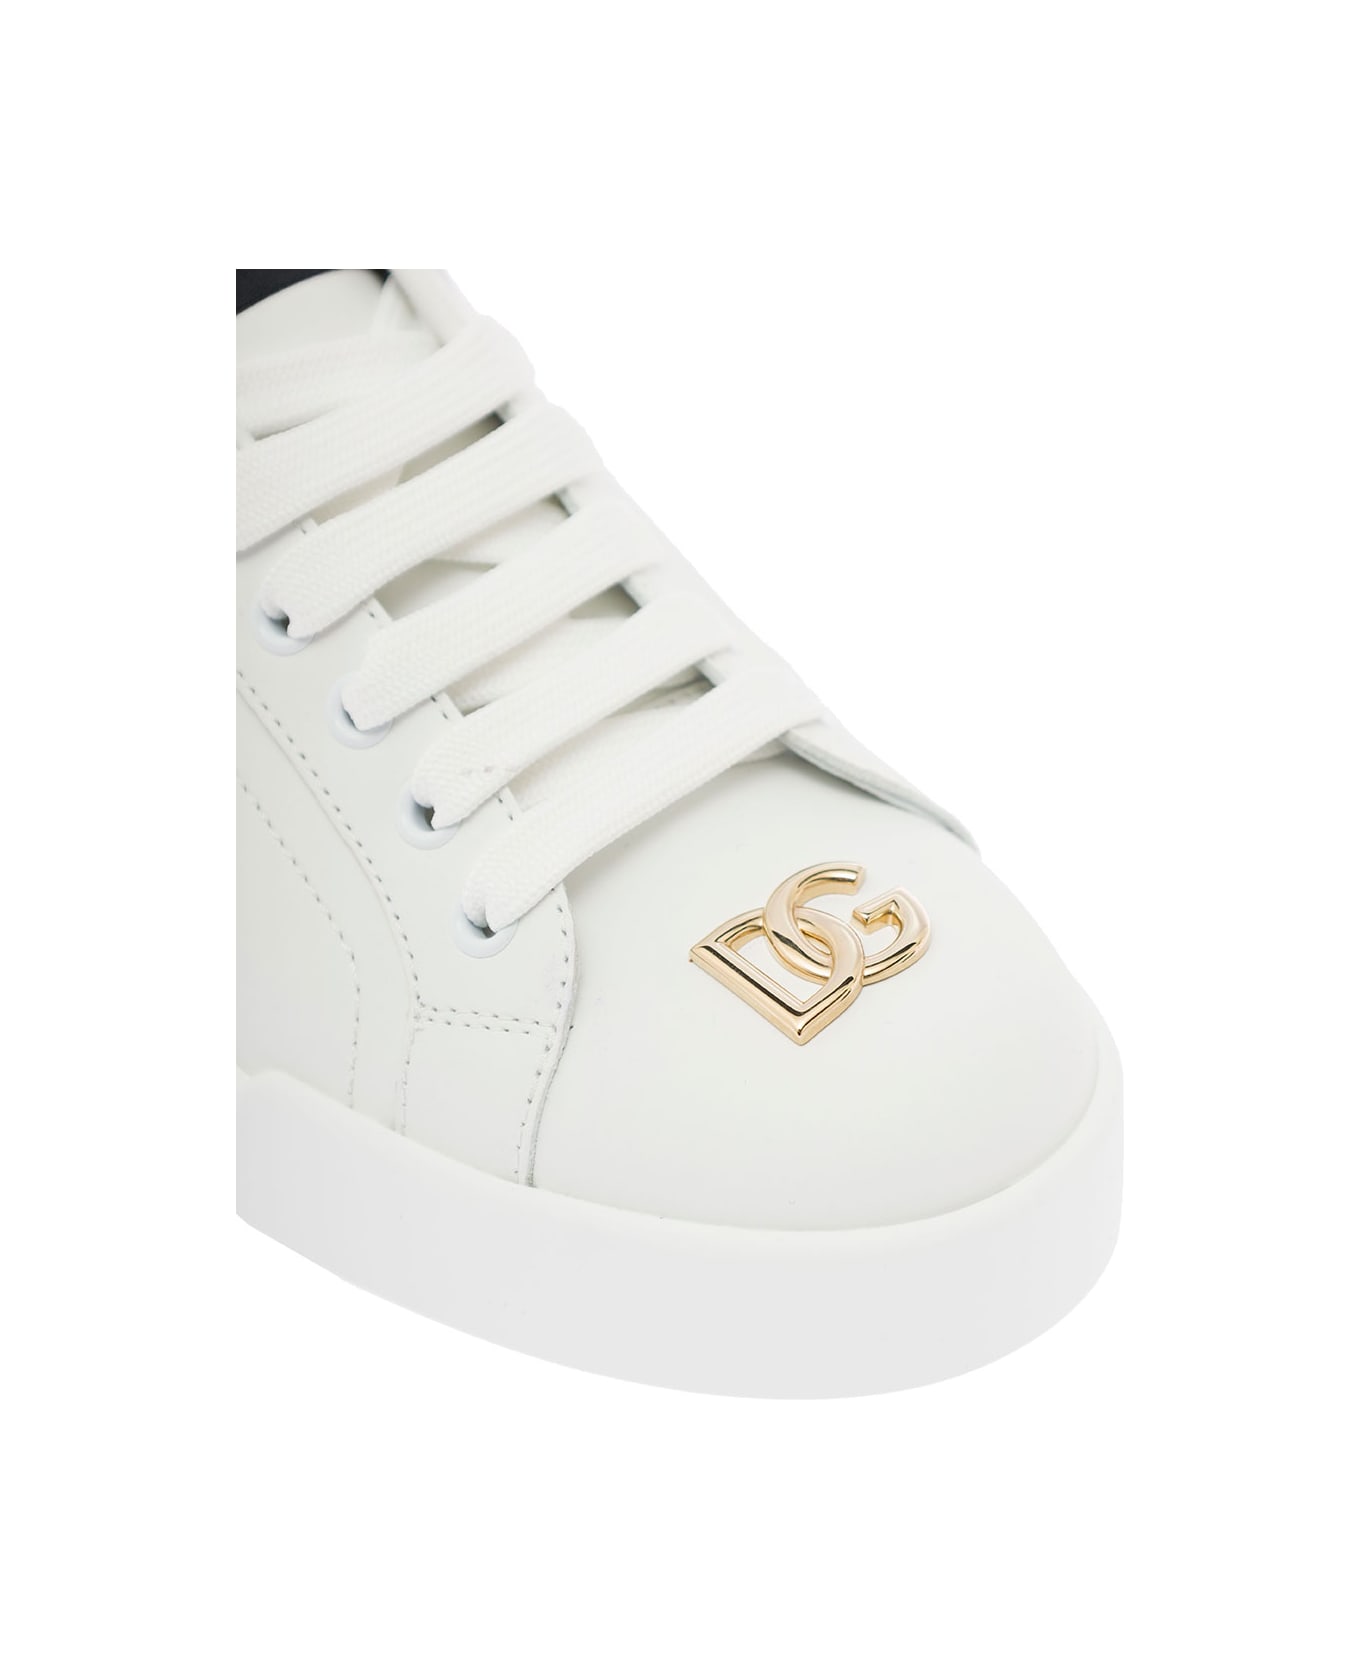 Dolce & Gabbana Woman's Portofino White Leather Sneakers - White